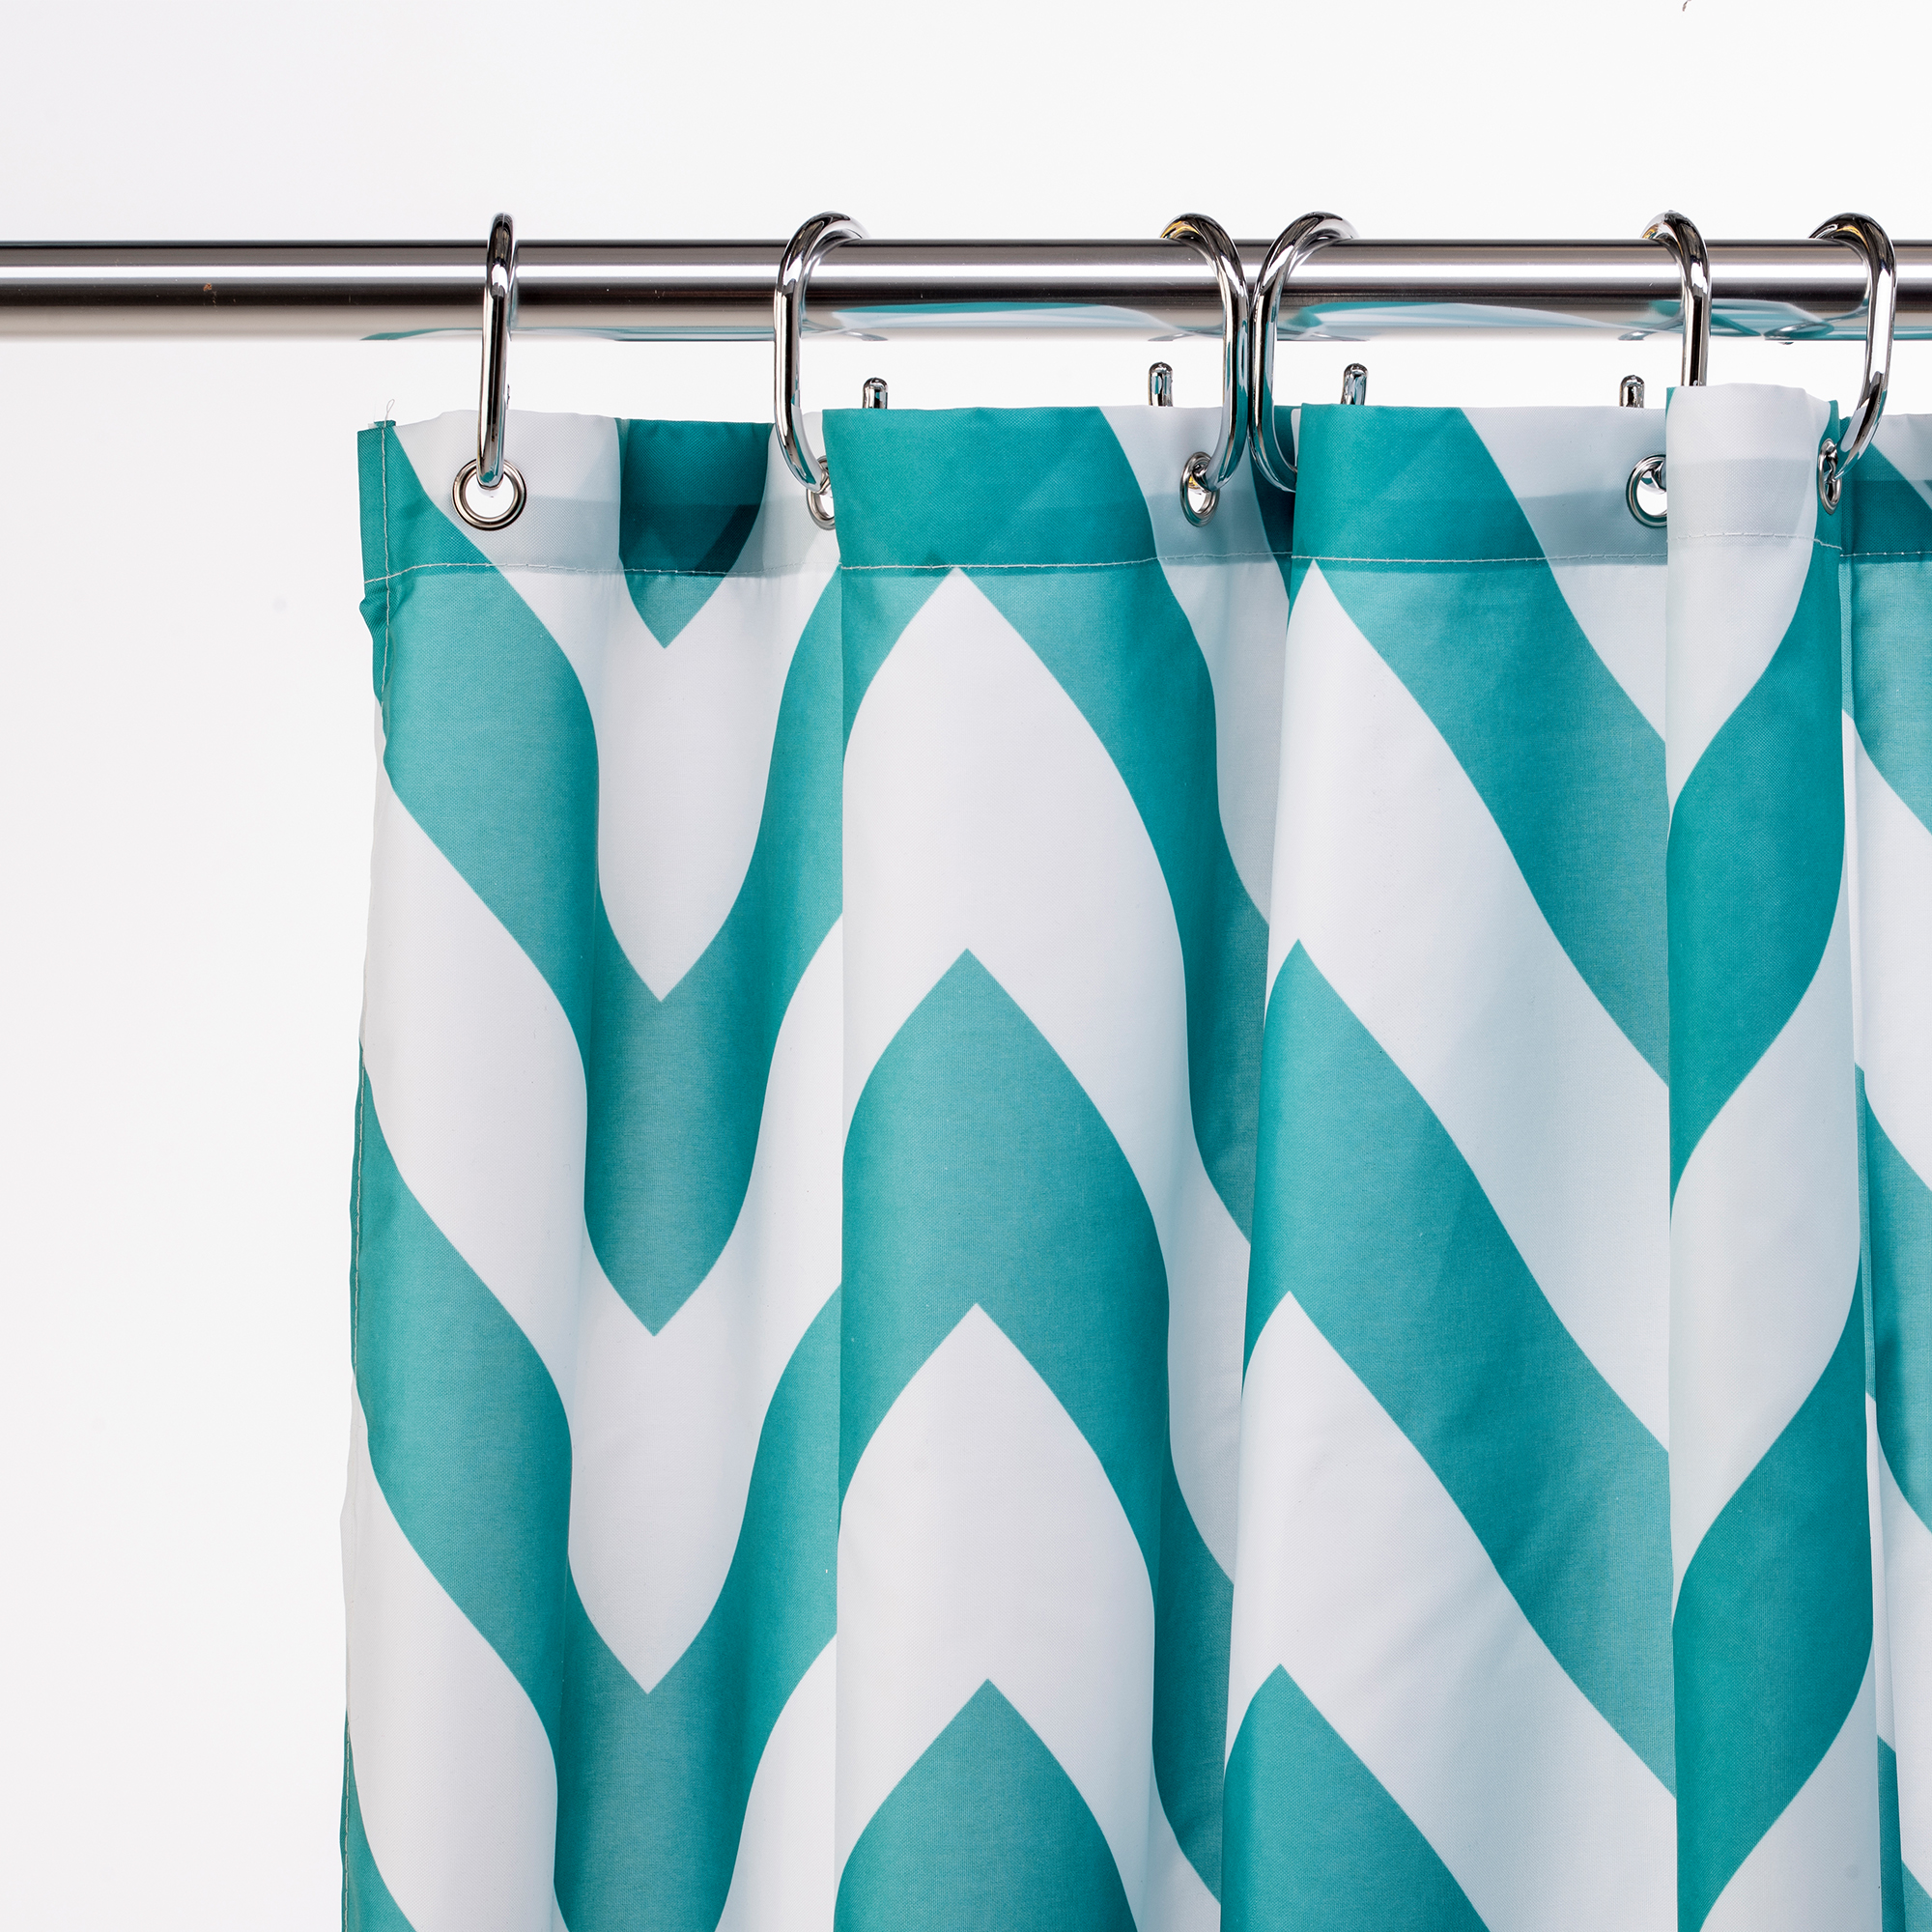 Image of Croydex Textile Shower Curtain - Aqua Chevron